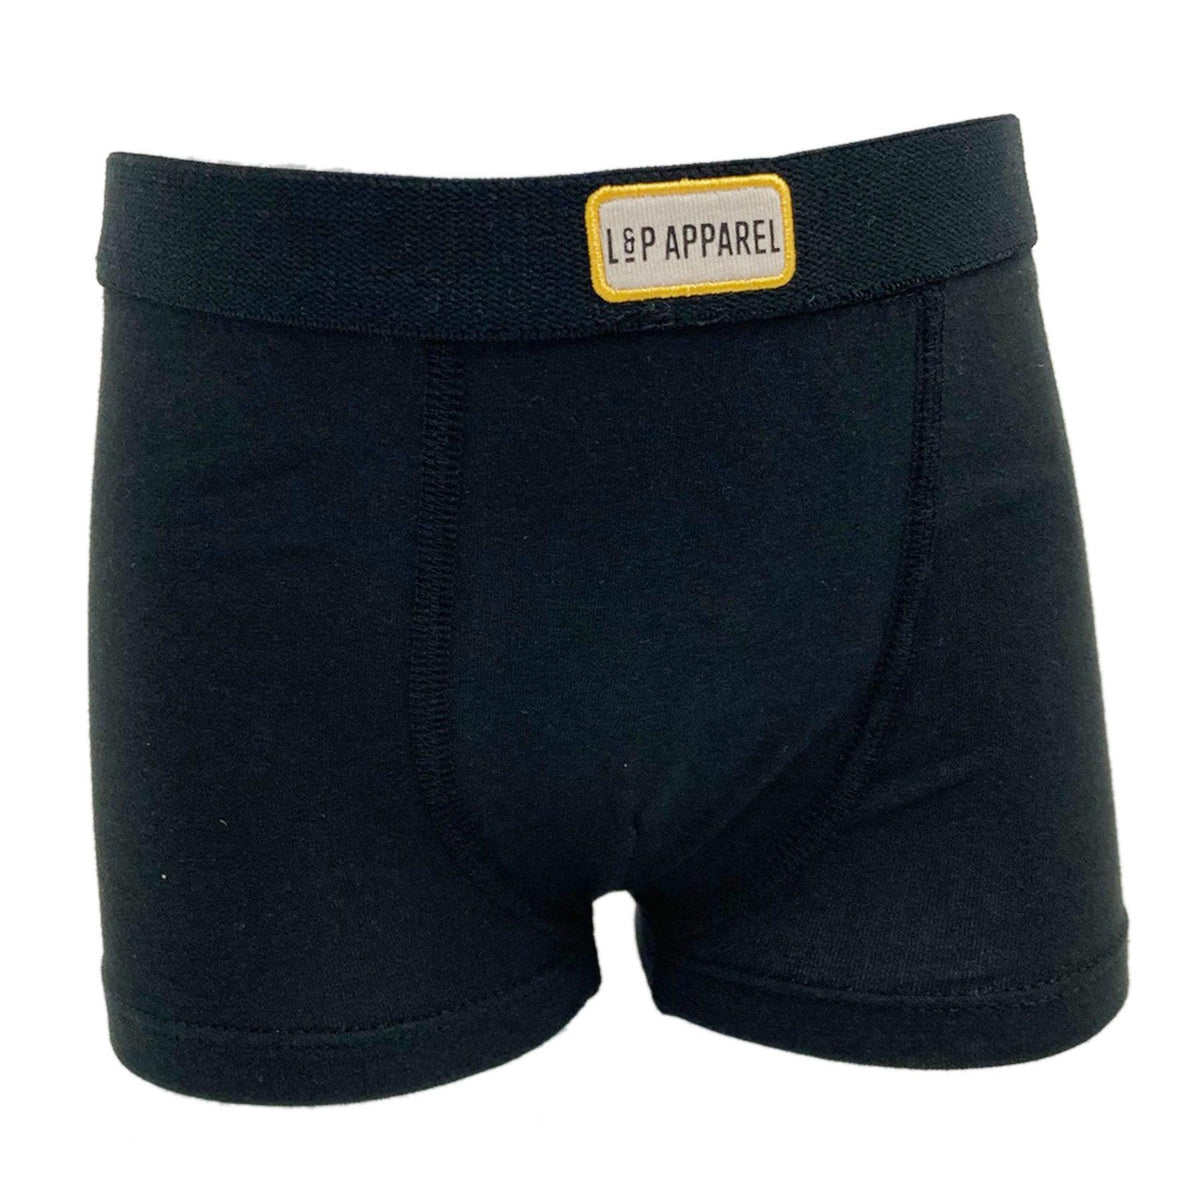 Girl 2T-7 Undergarments – Head Shoulders Knees and Toes